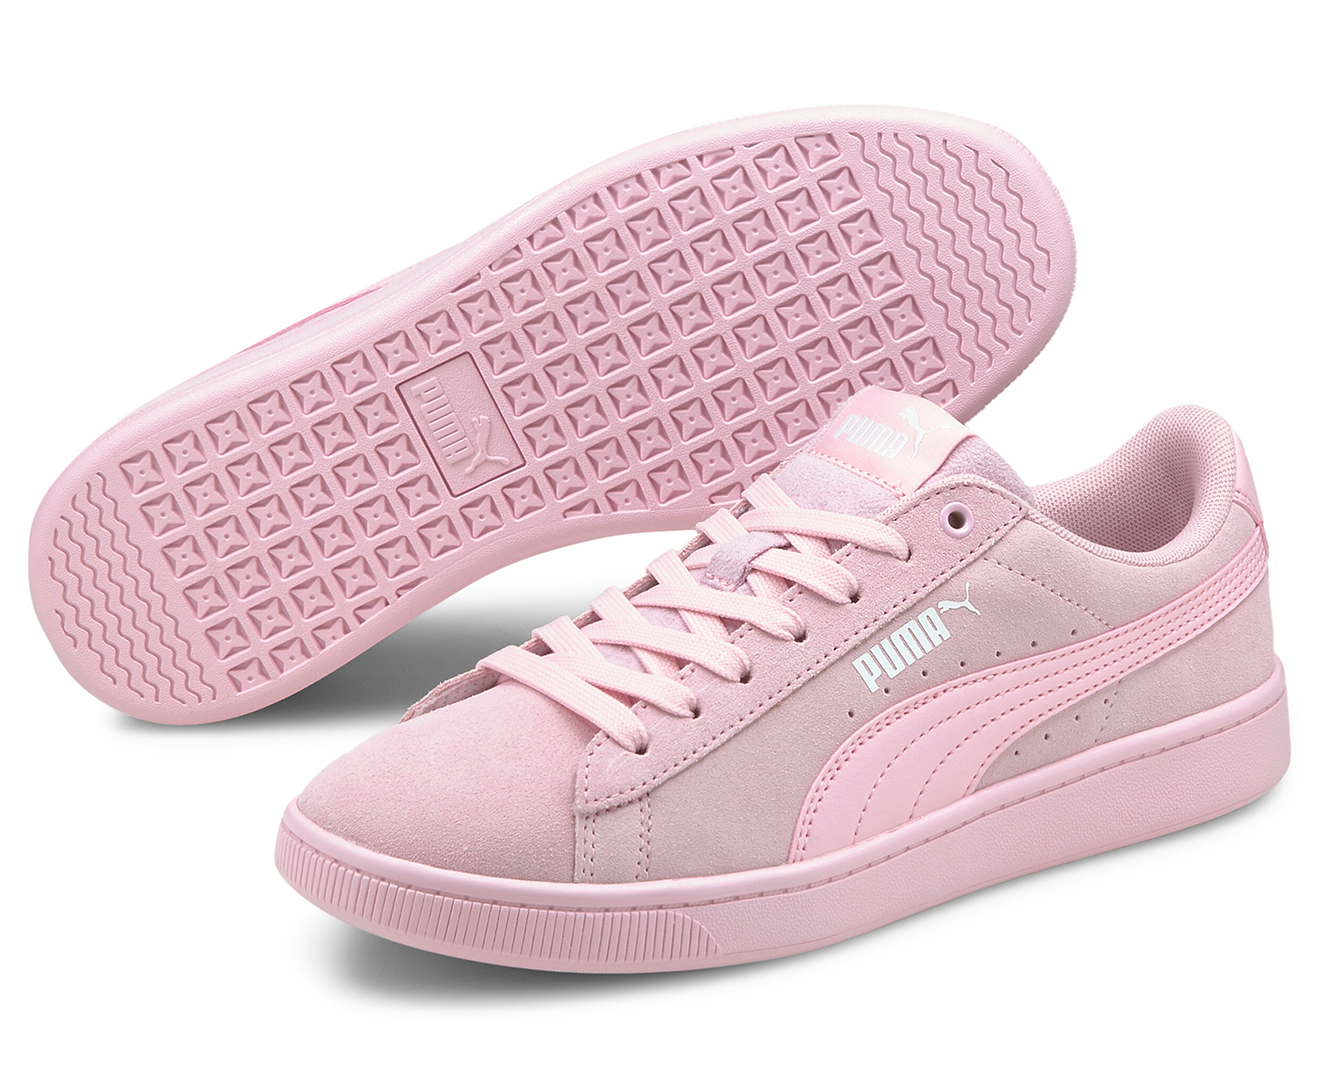 Puma Women's Vikky V2 Sneakers - Pink Lady/White | Catch.com.au